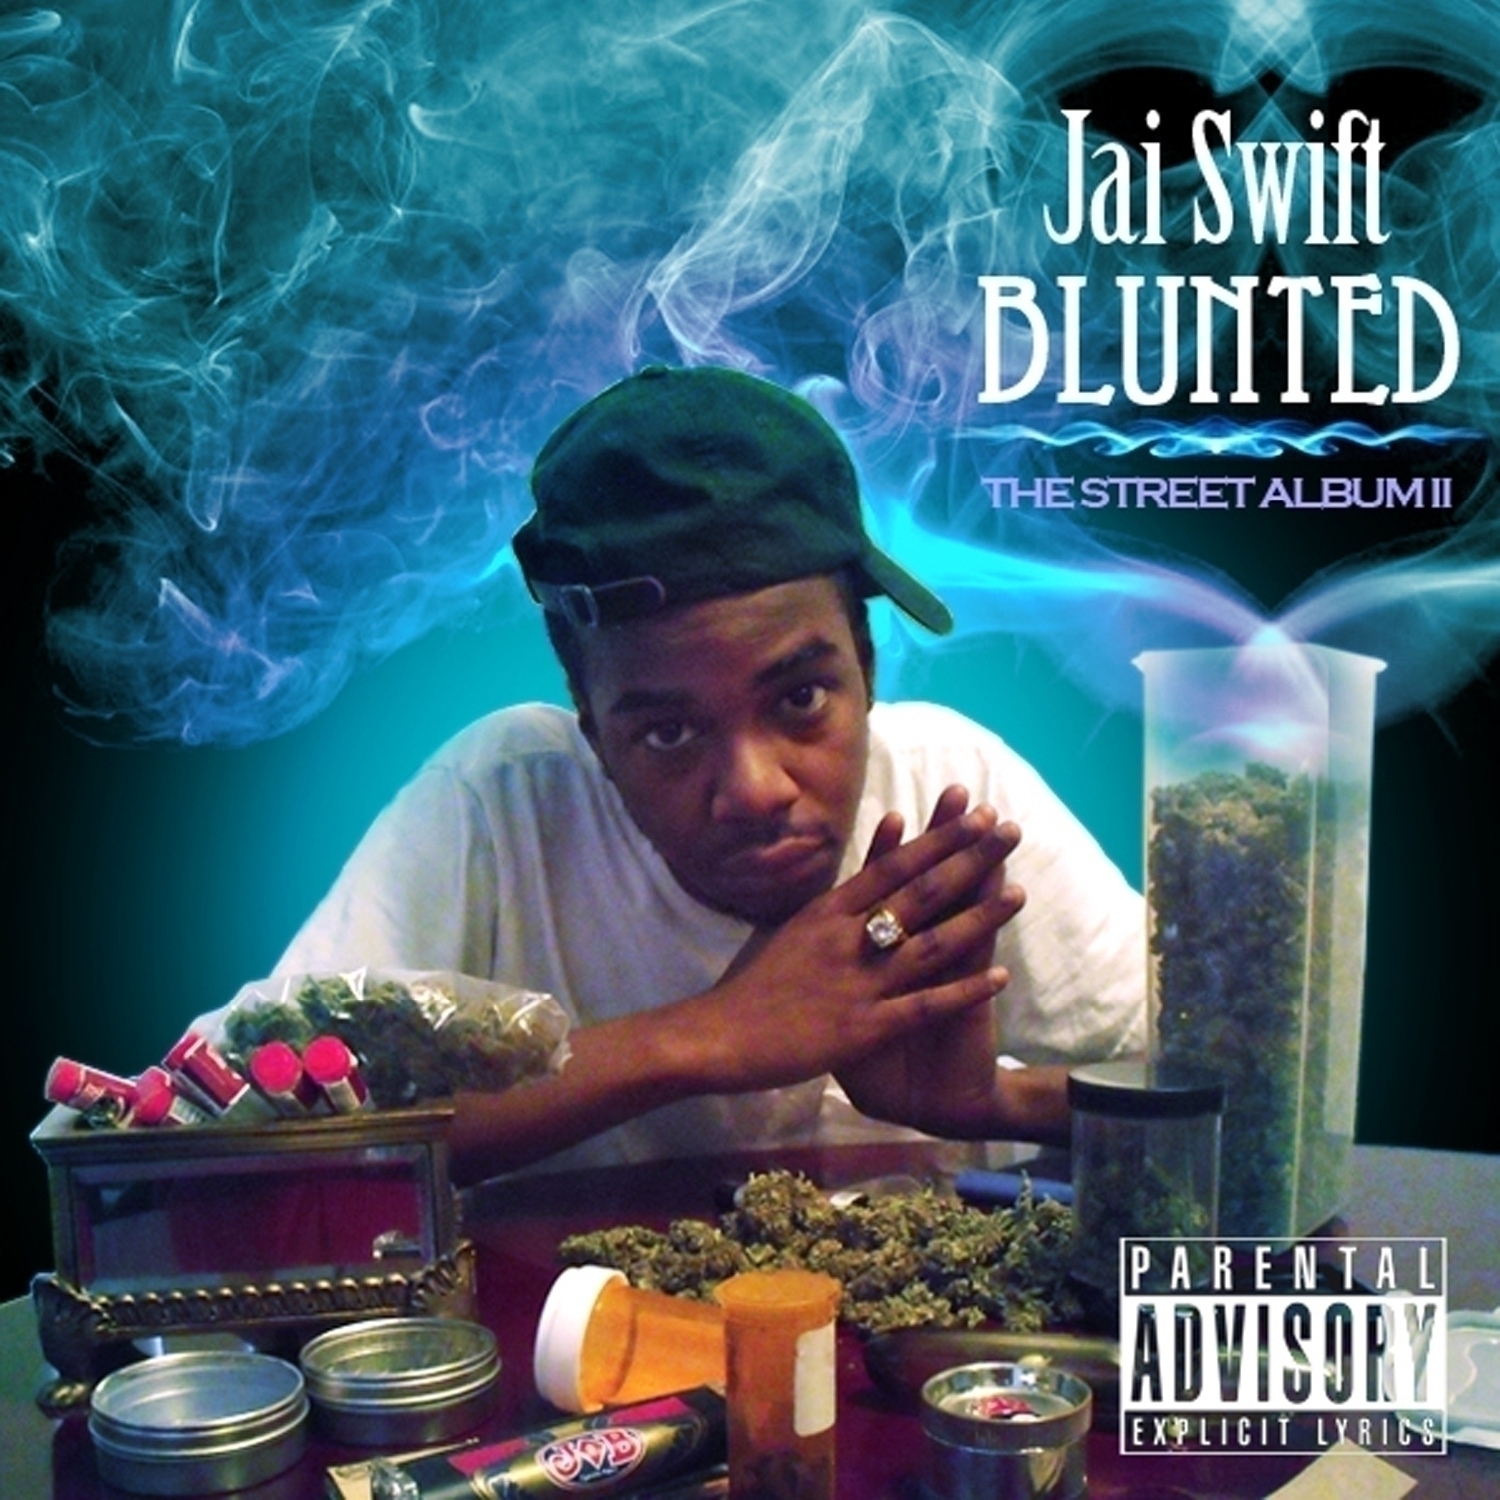 Blunted: The Street Album II